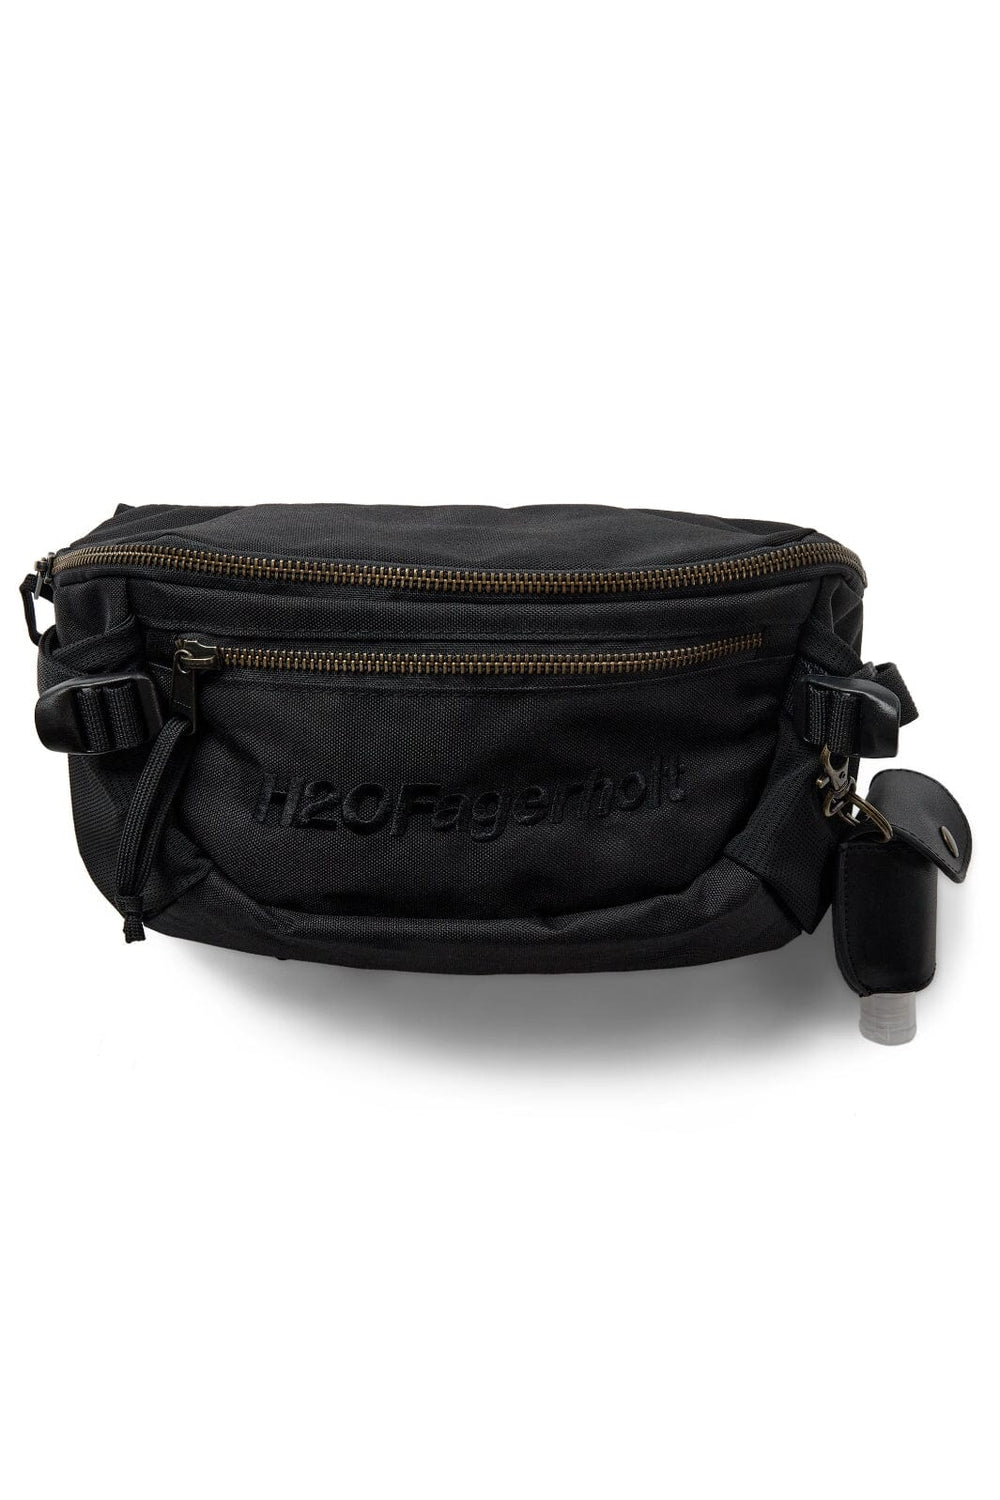 H2O Fagerholt - Lisa Bag - 3501 Deep Black Bæltetasker 